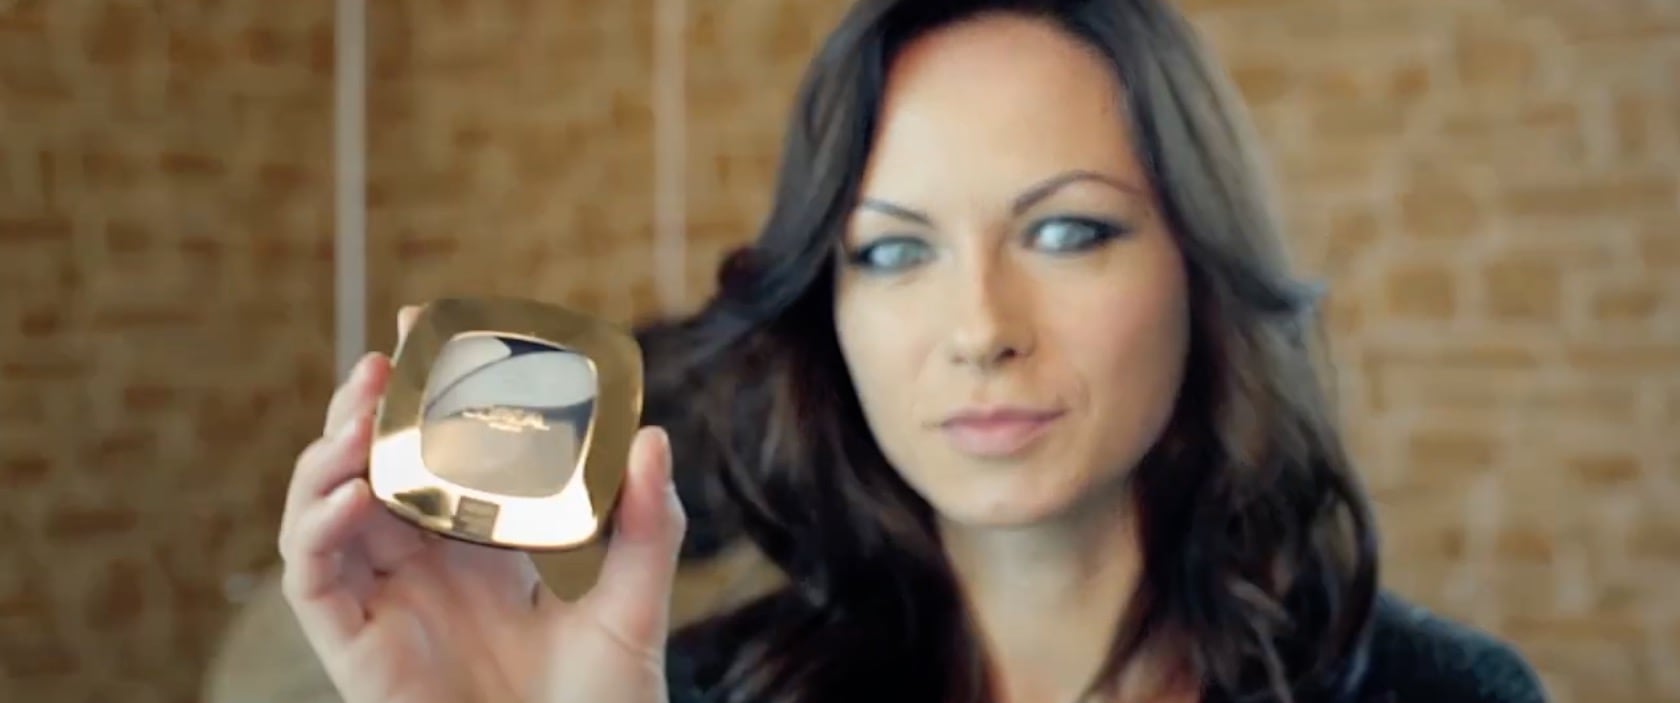 Case video review of cosmetics" Beauty video MakeupUA Smoky Eye"